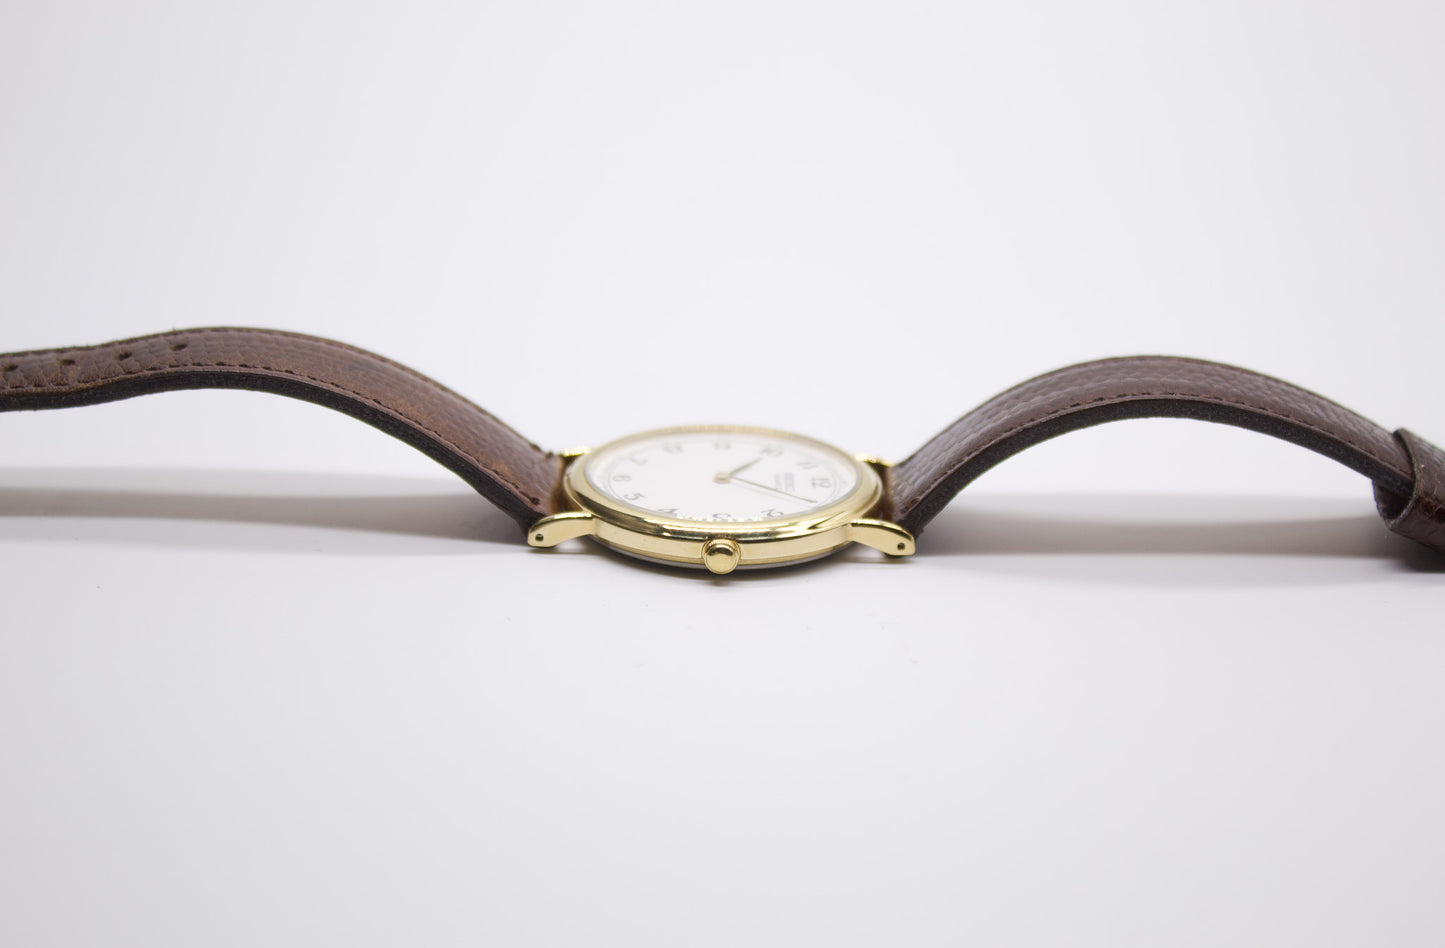 1991 Seiko Cream White Arabia Numerals Men's Wrist-Watch